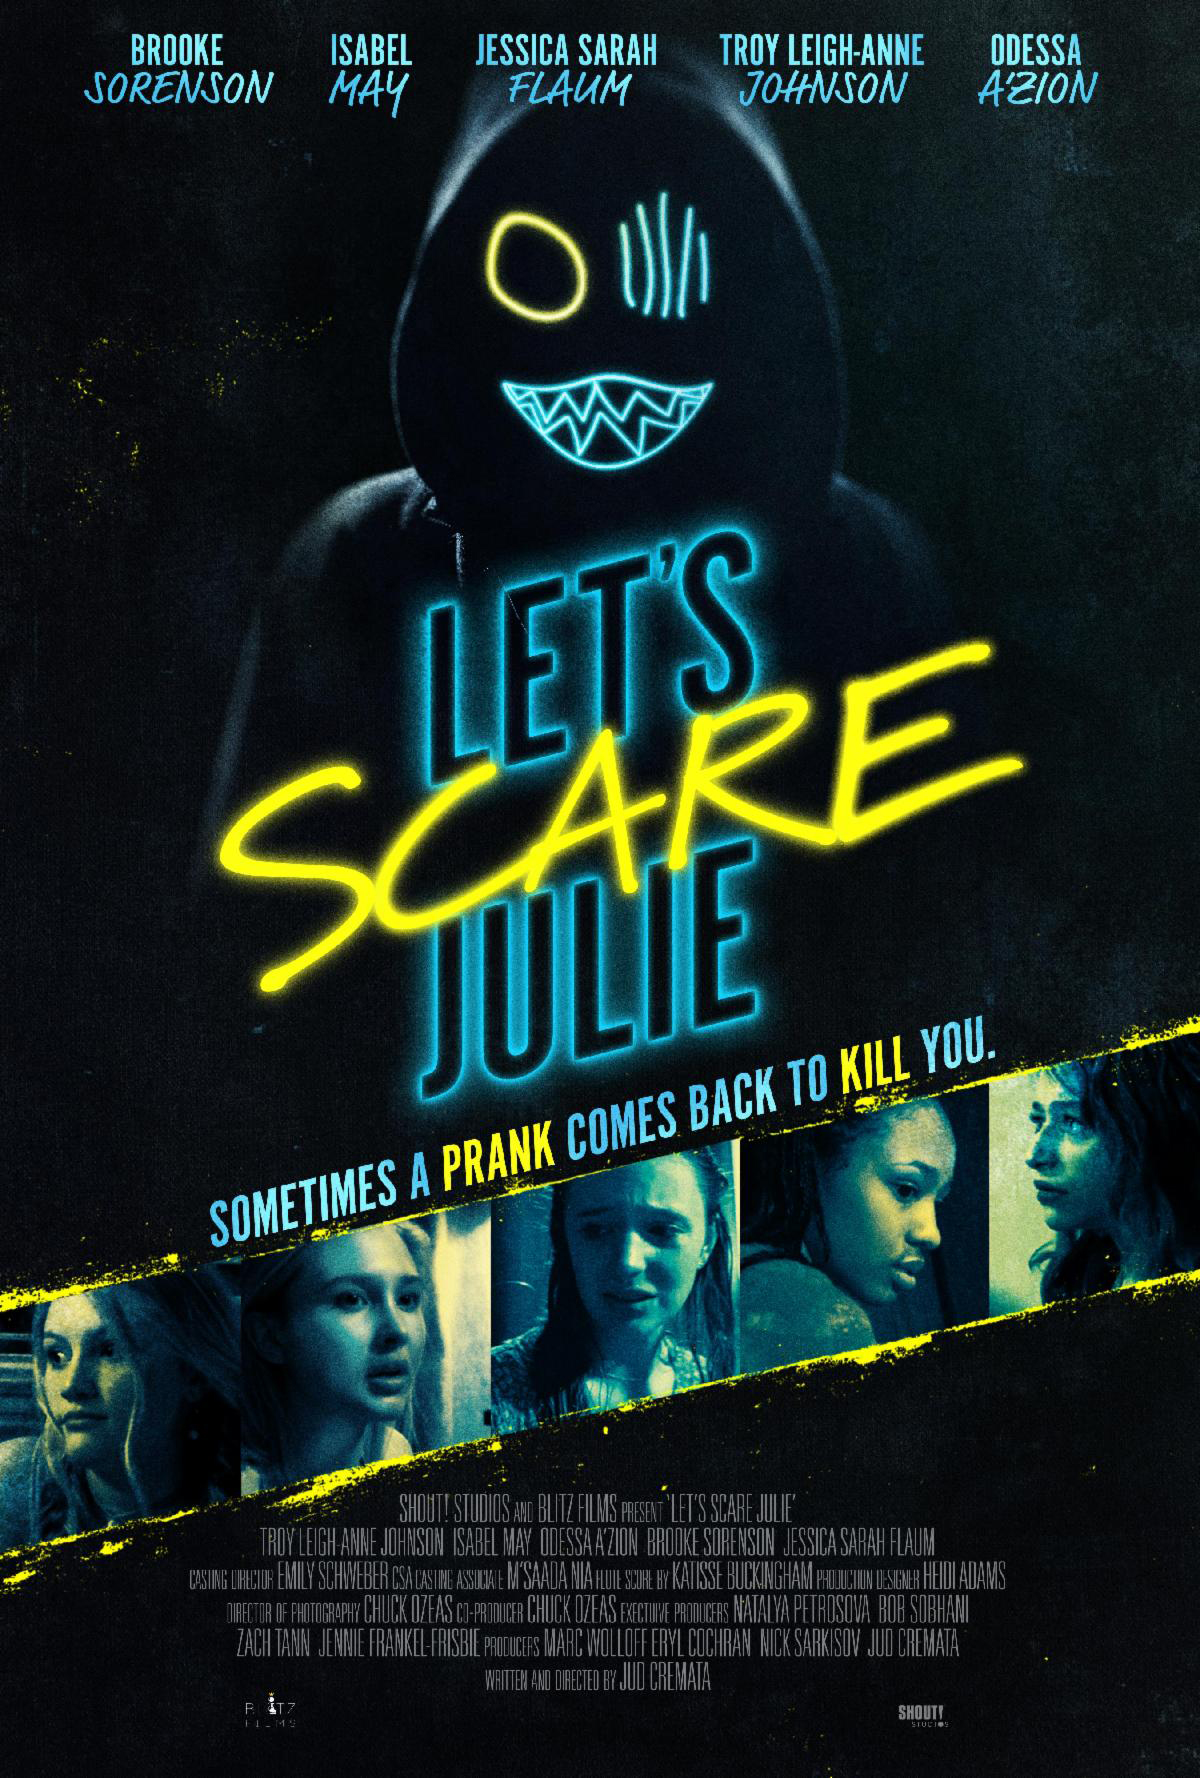 'Let's Scare Julie' from Shout Studios